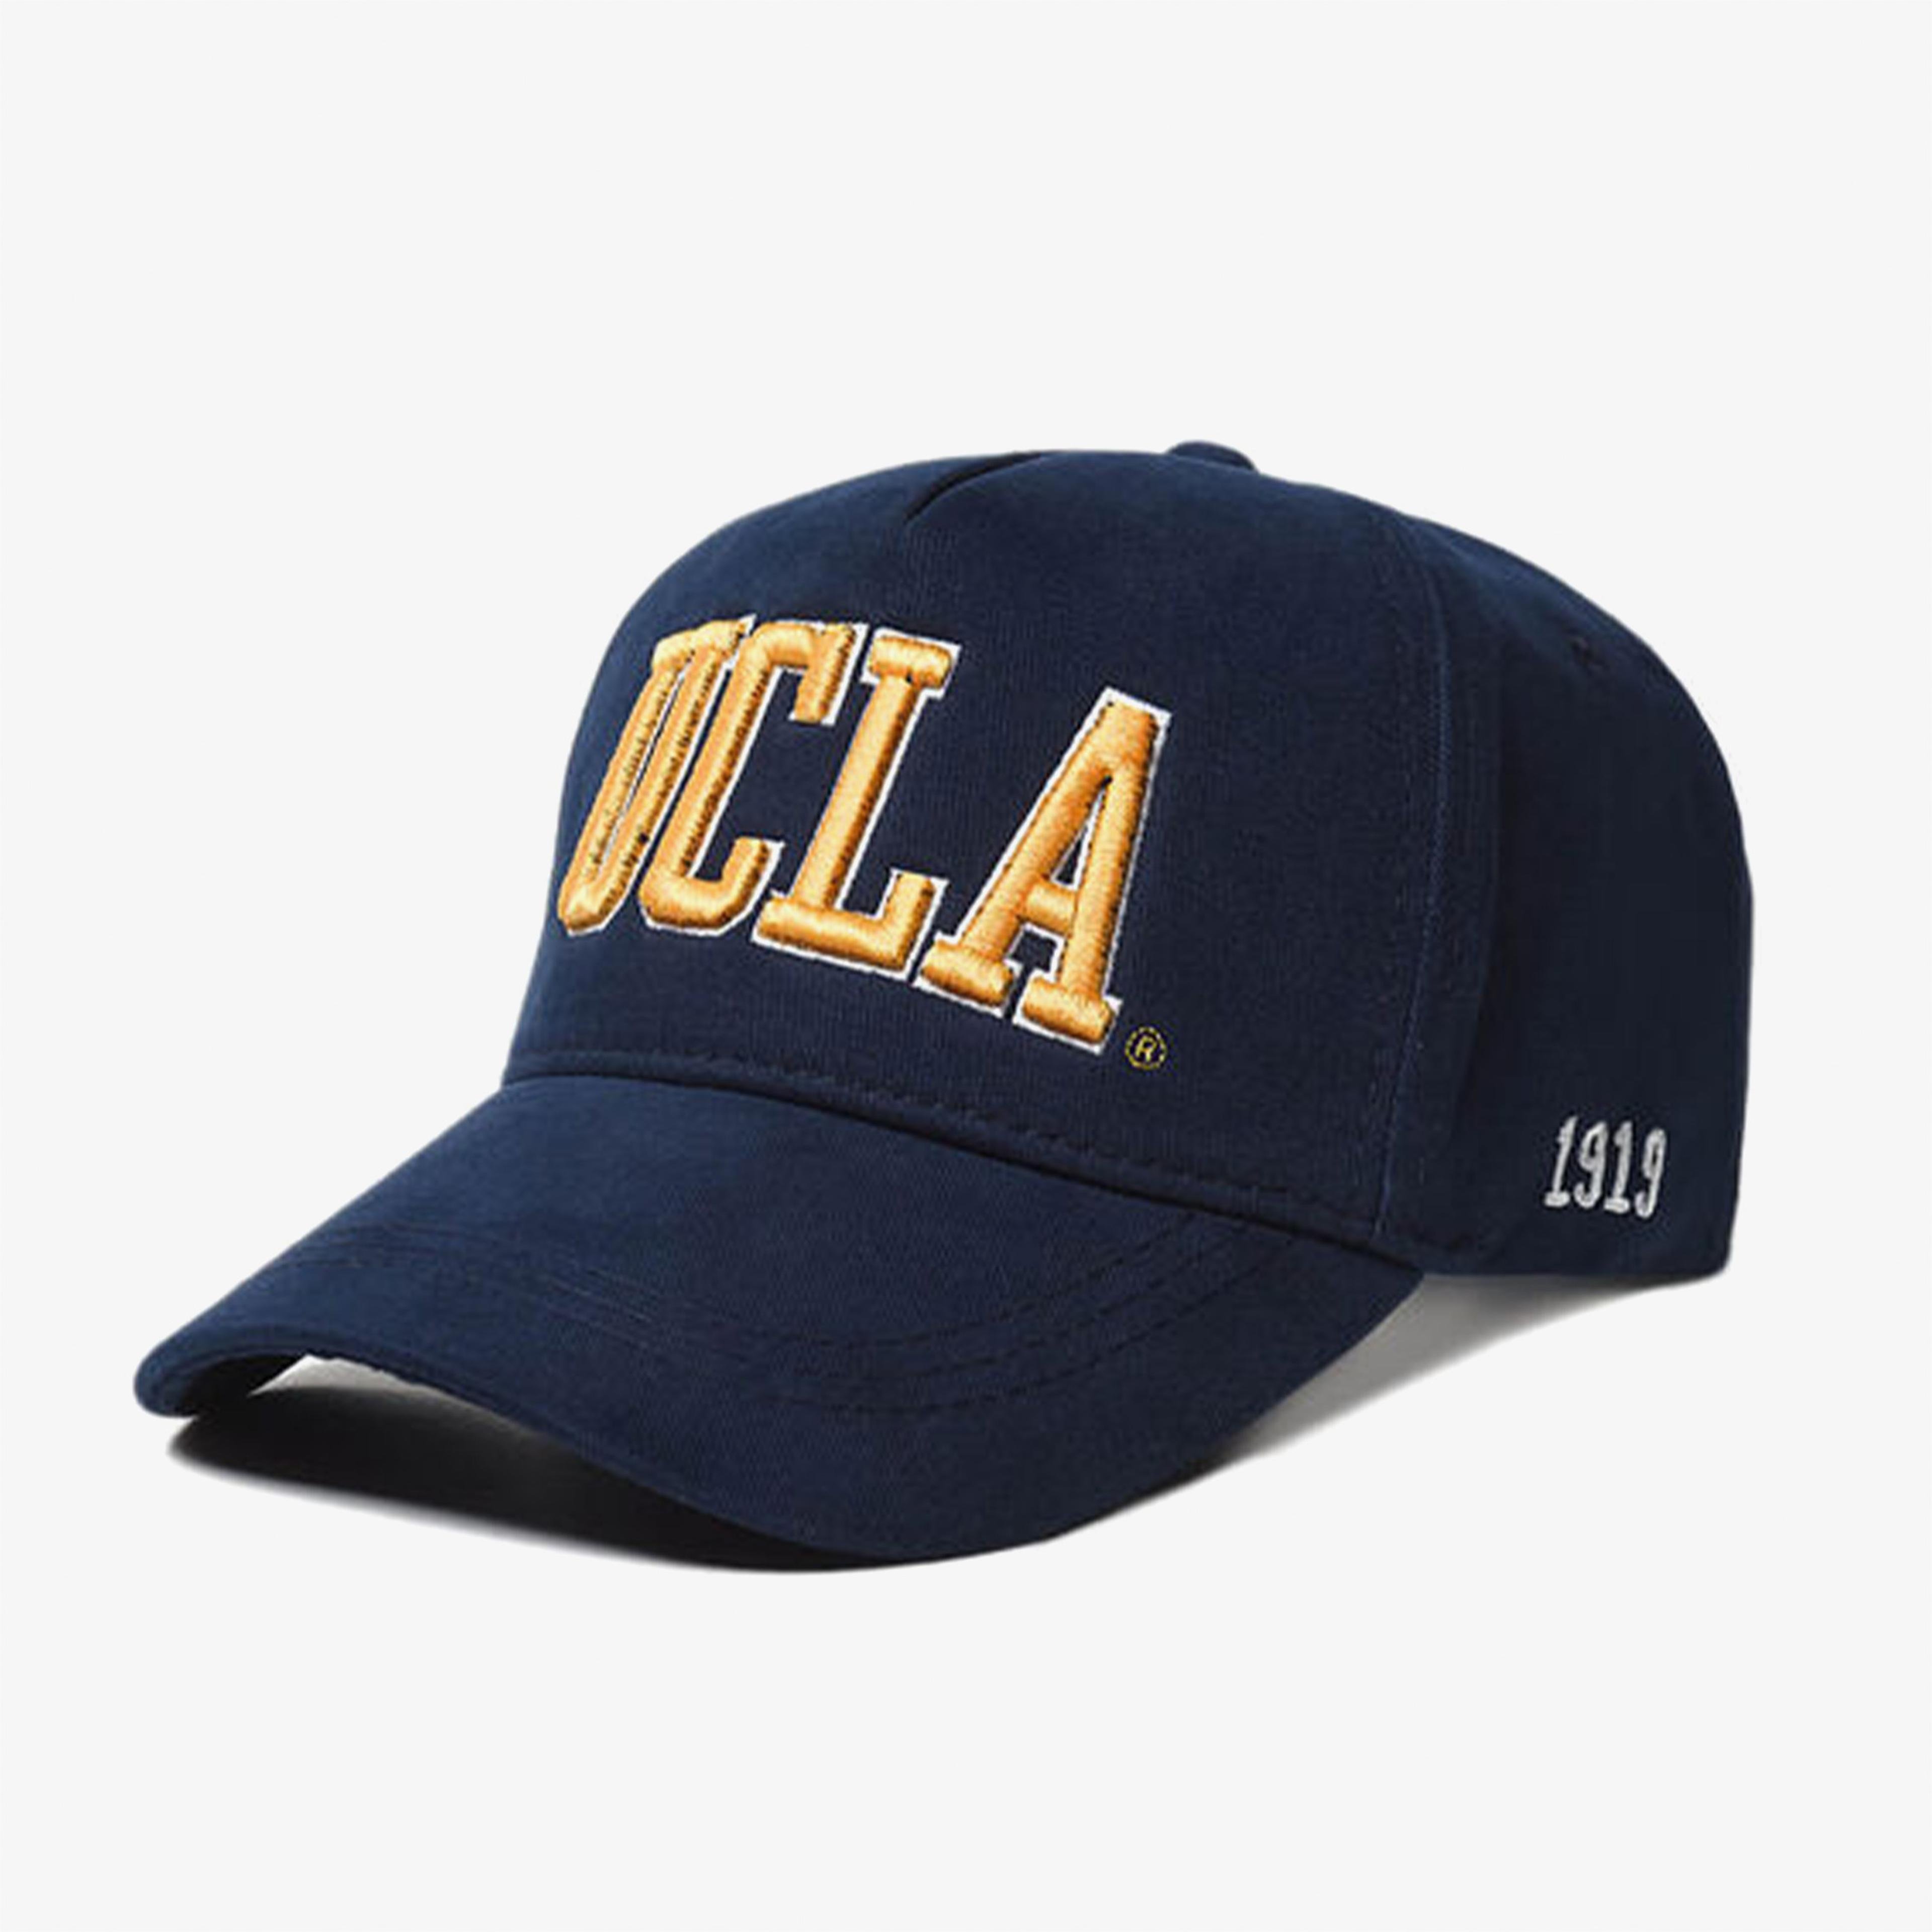 UCLA Ranch Lacivert Şapka